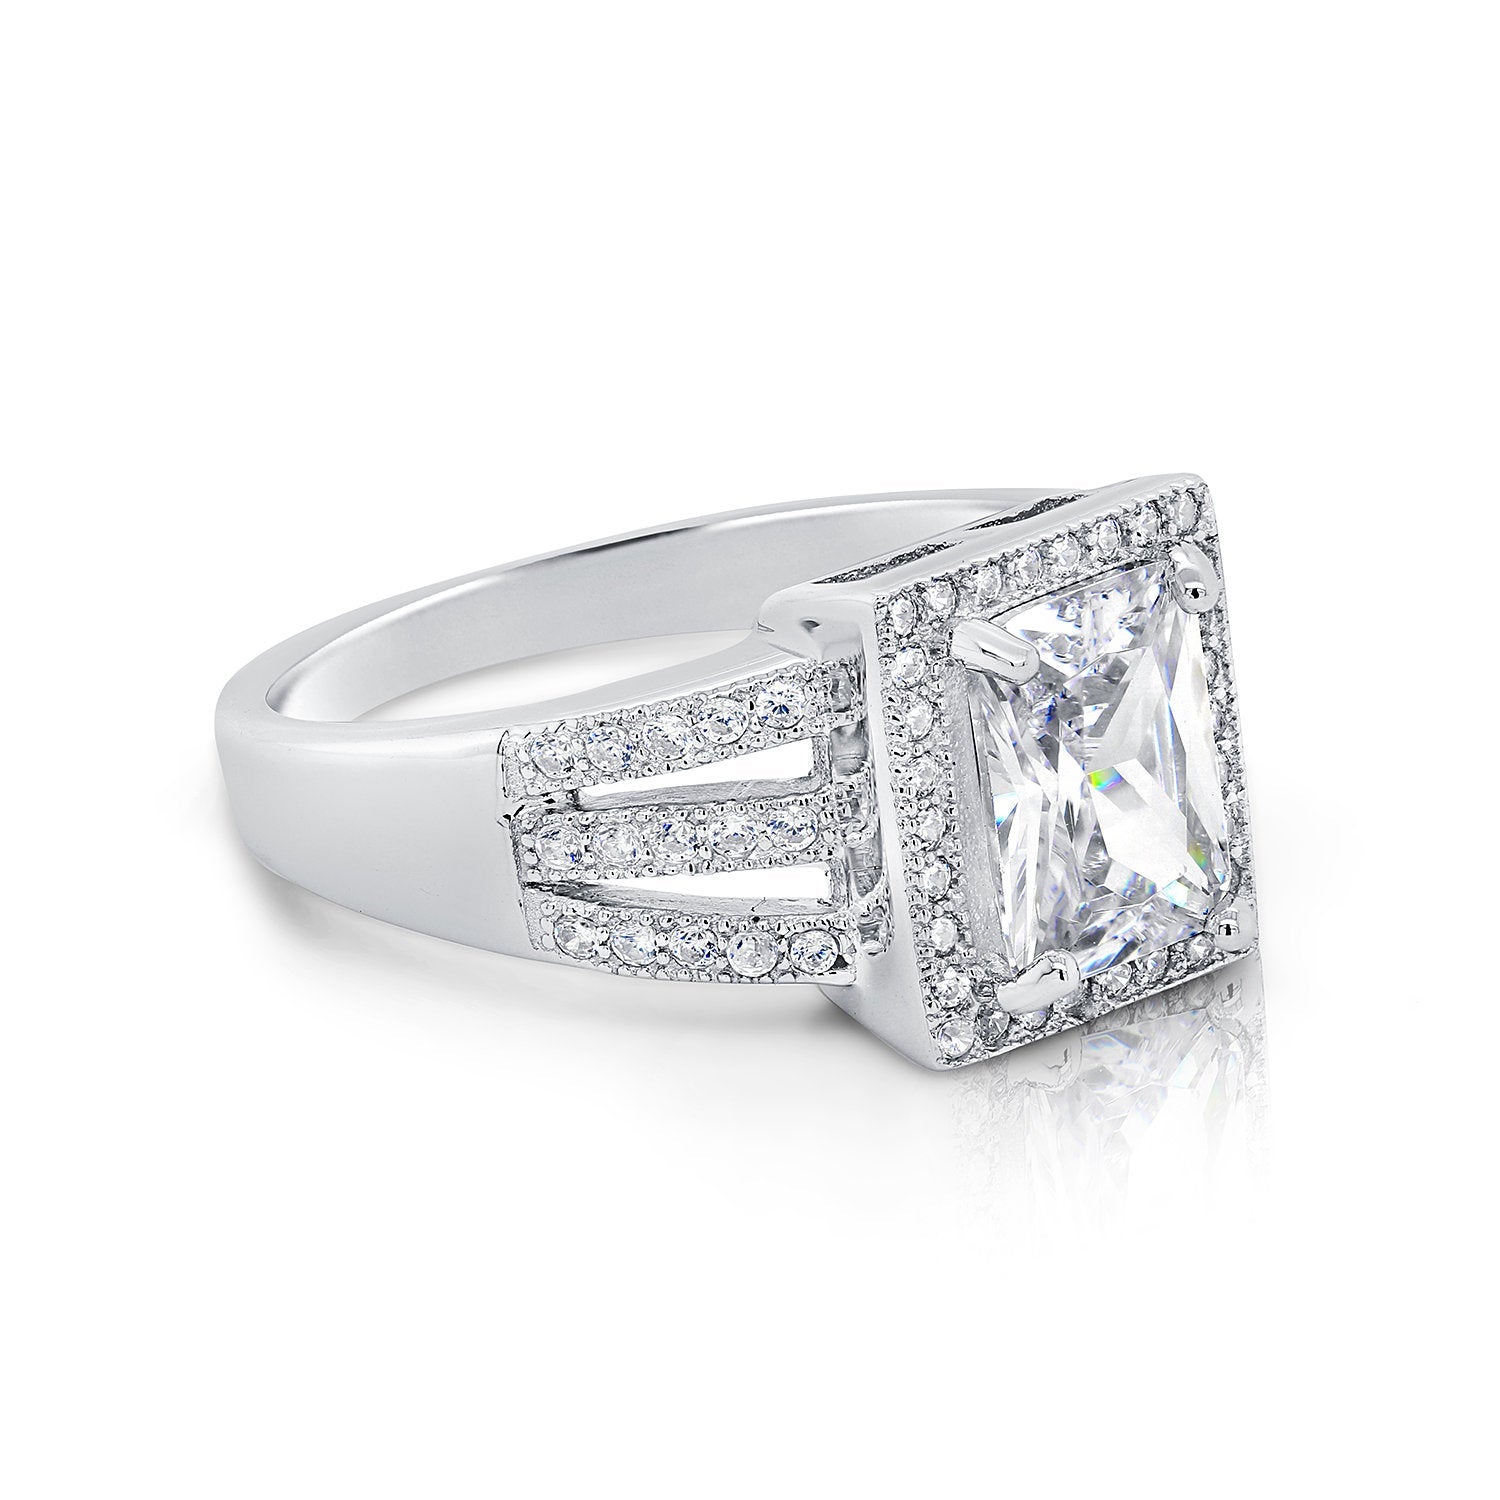 Sterling Silver Princess Baguette Ring